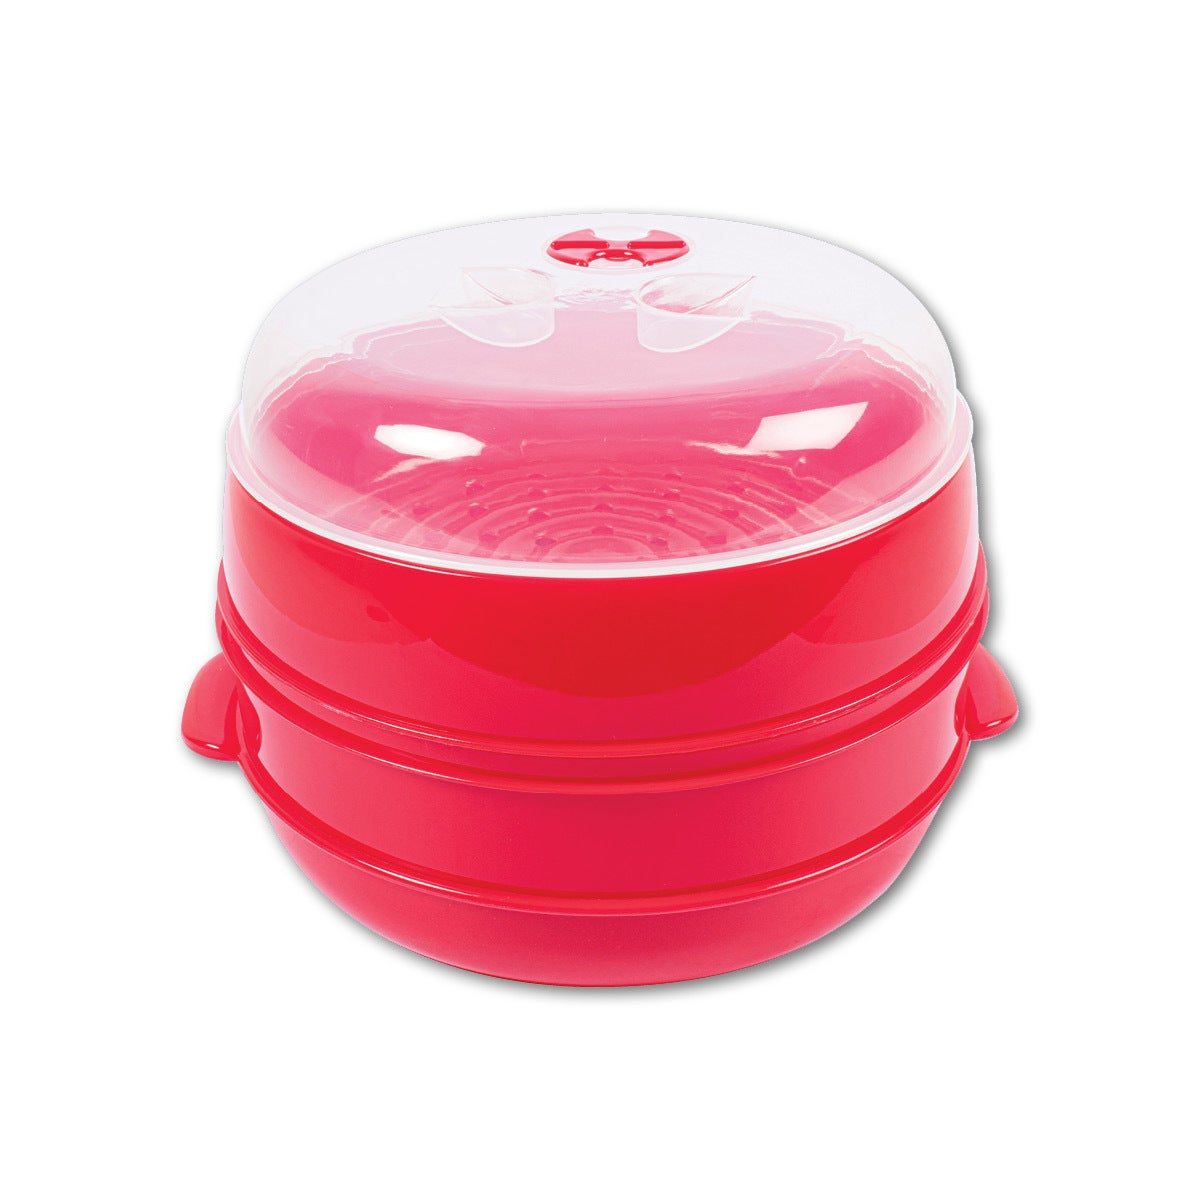 Home Master 2 Tier Steamer Basket BPA Free Safe Simple Microwaveable